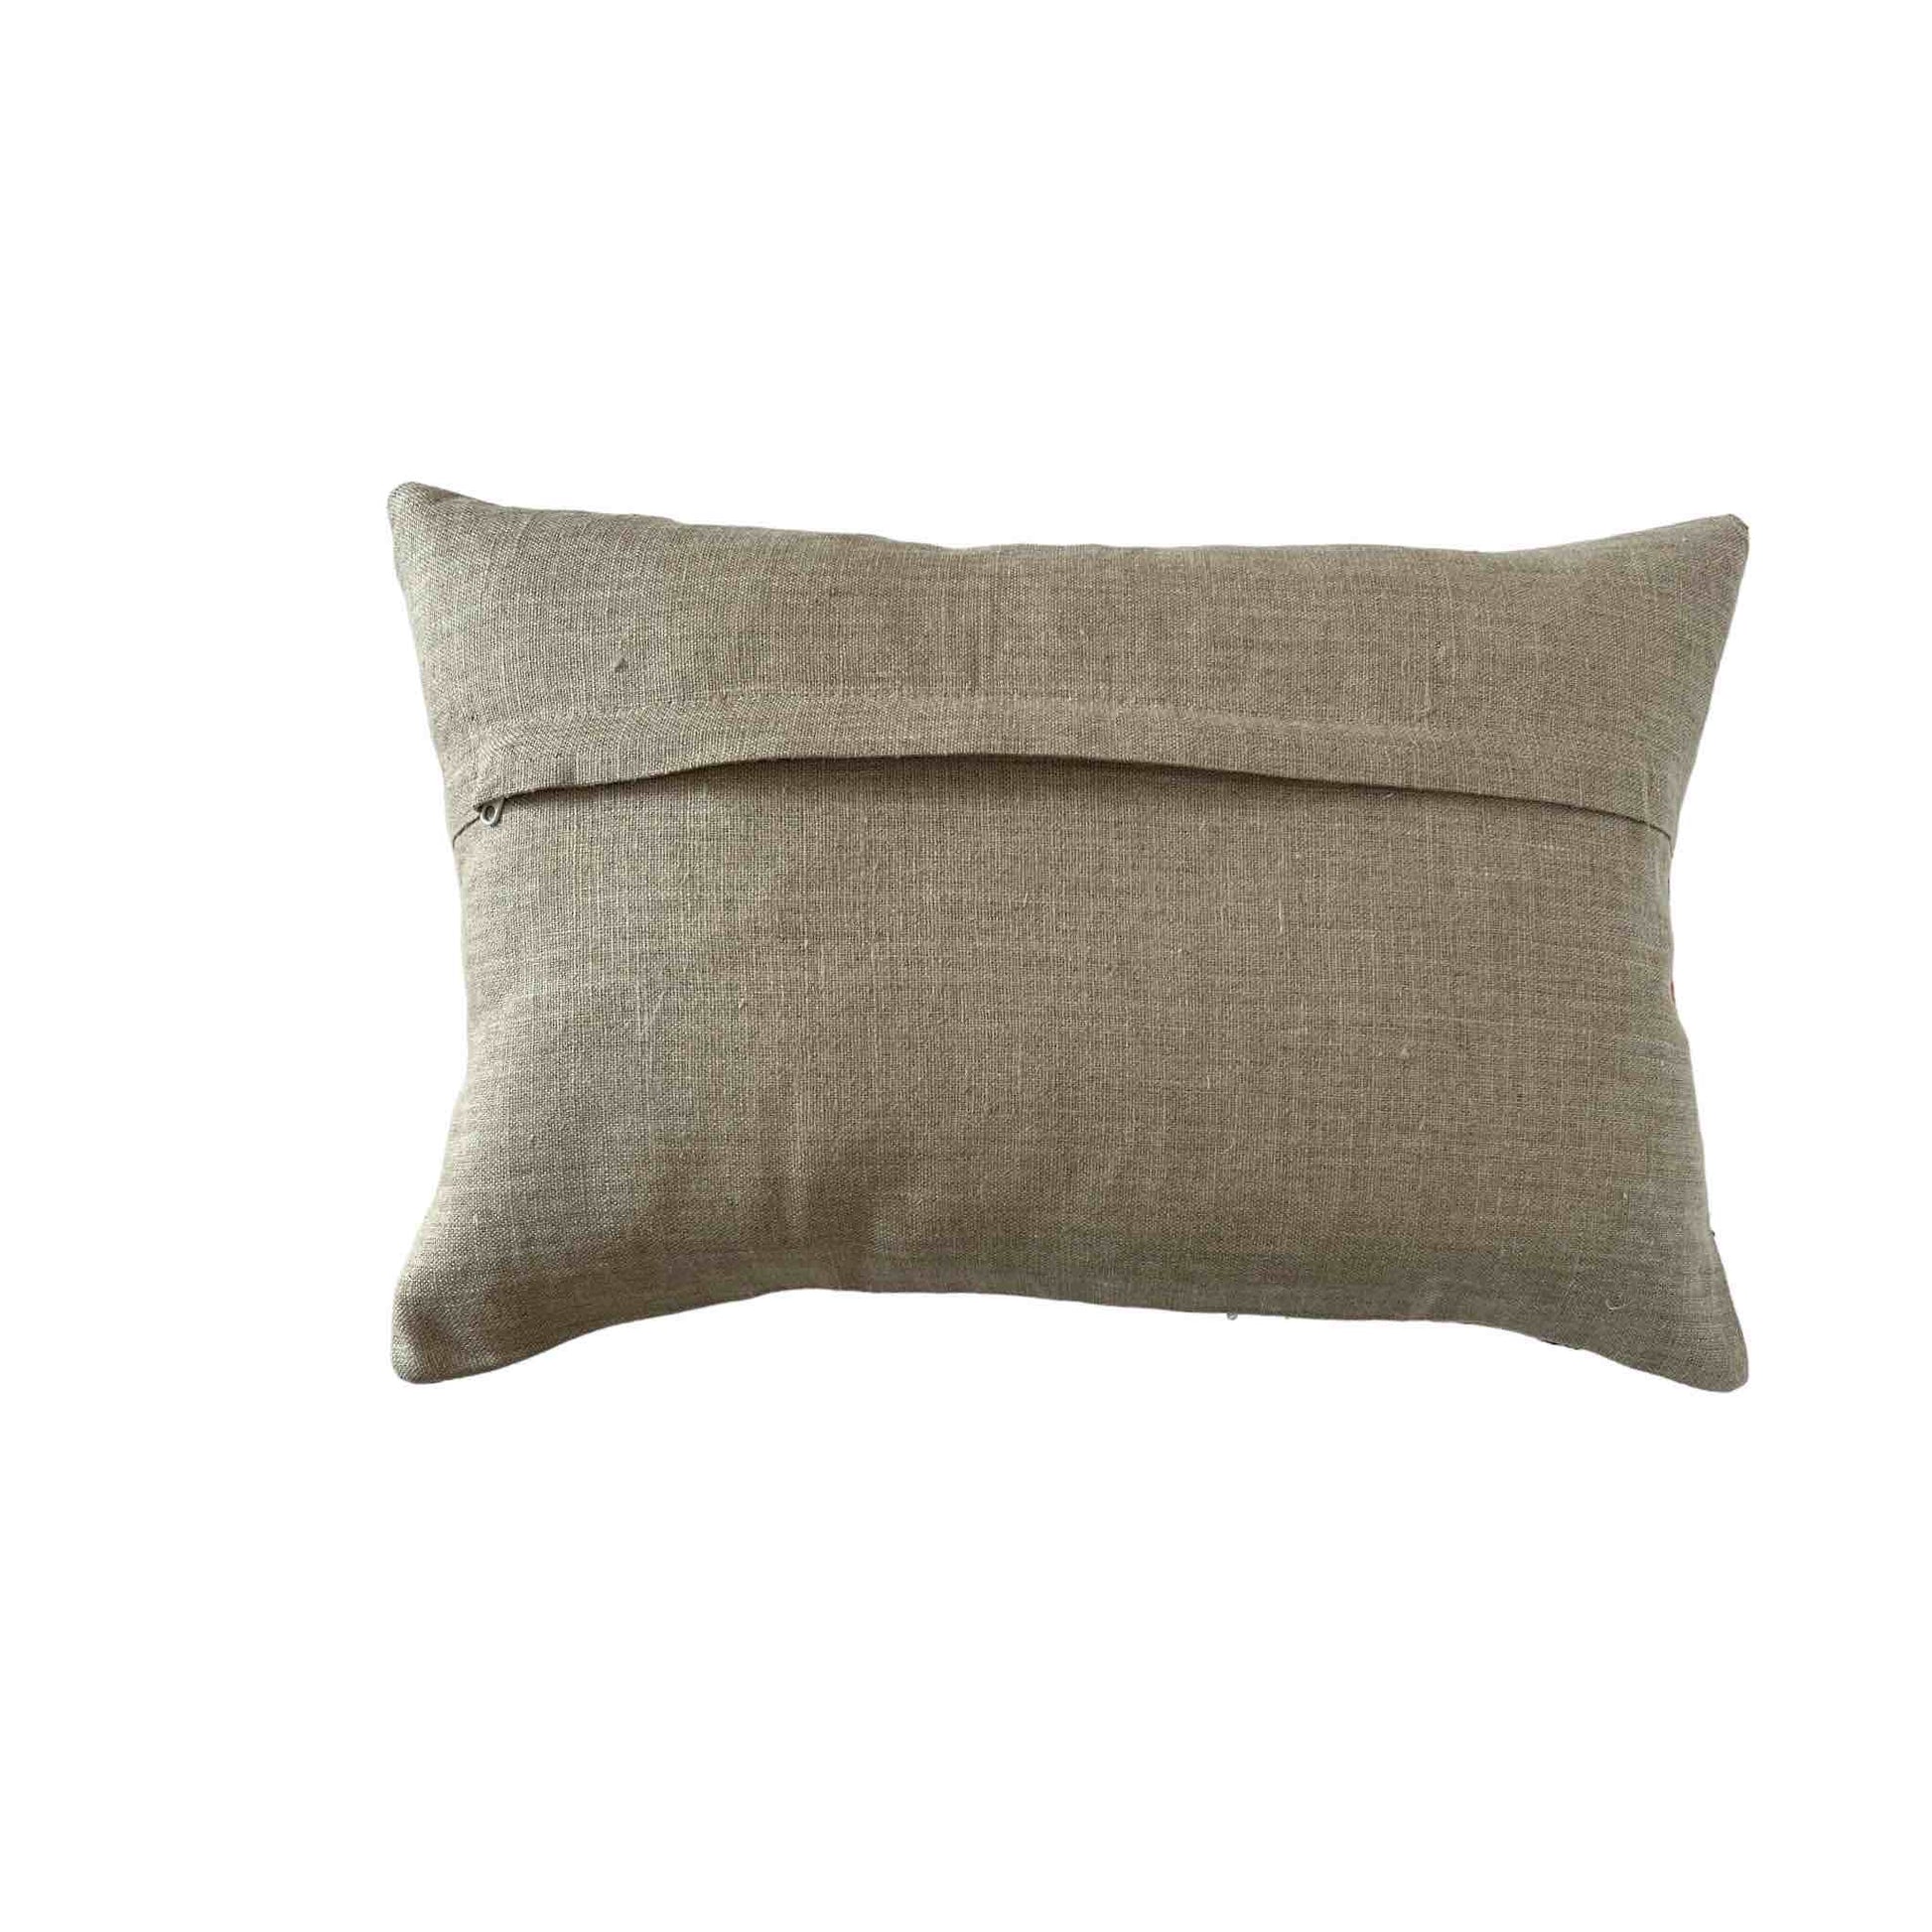 Coral kantha cushion reverse